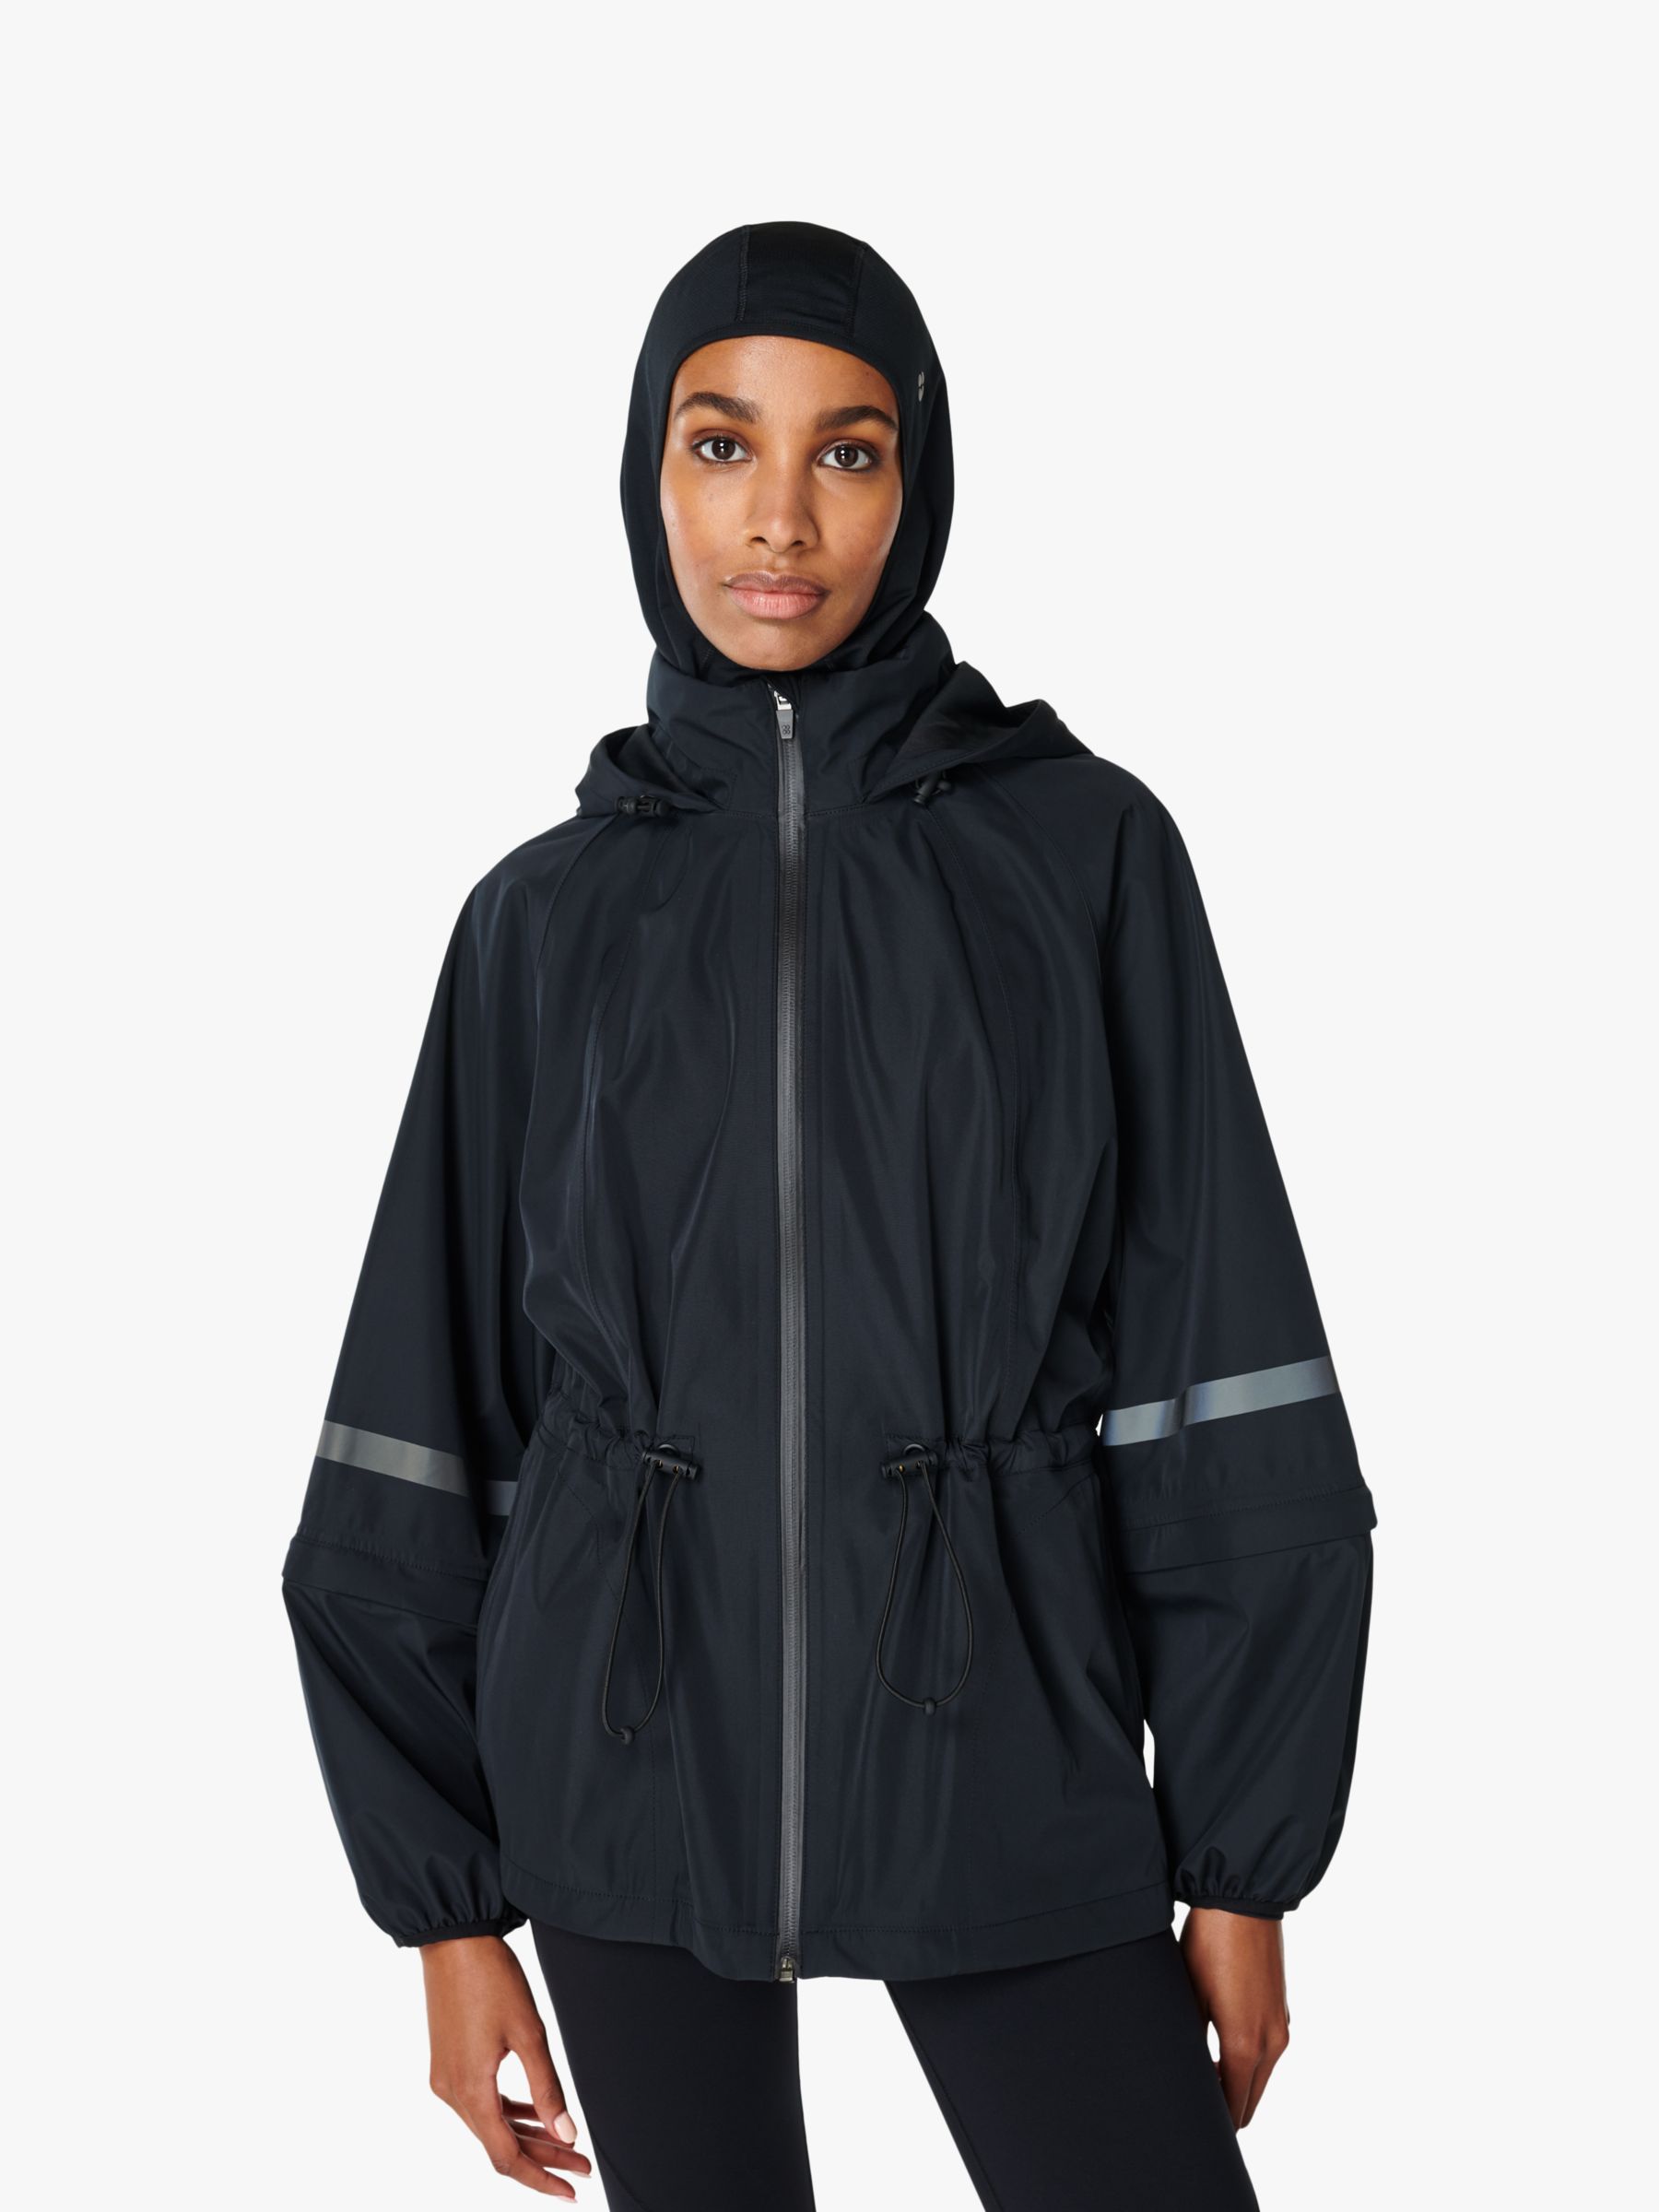 Sweaty Betty Mission Performance Waterproof Jacket, Black, XXS